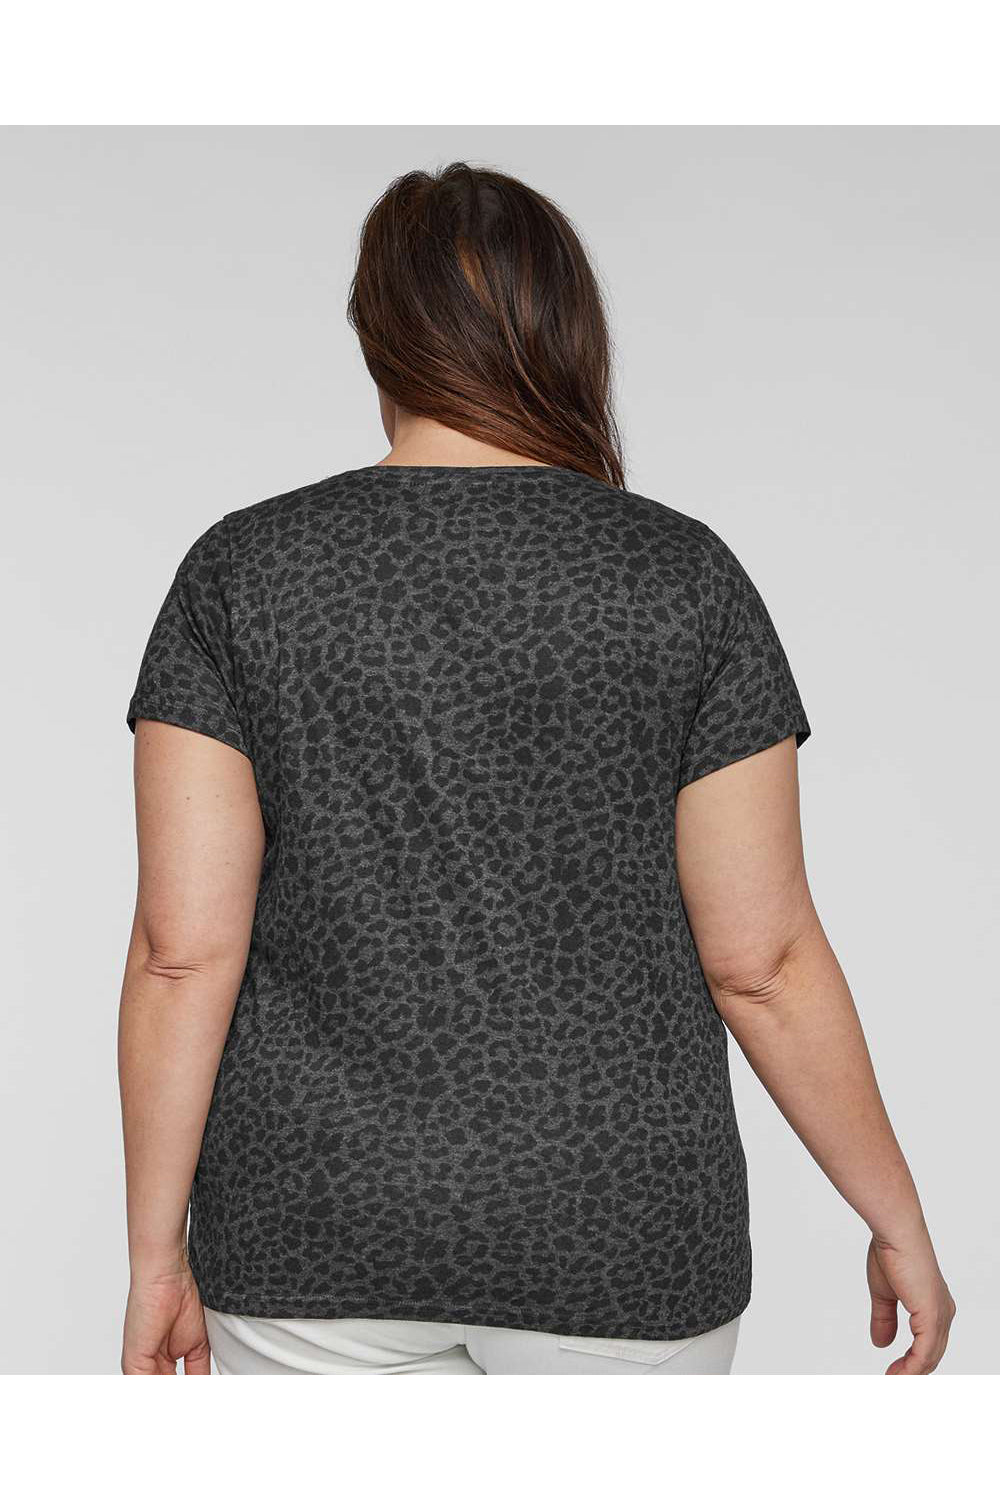 LAT 3816 Womens Curvy Collection Fine Jersey Short Sleeve Crewneck T-Shirt Black Leopard Model Back